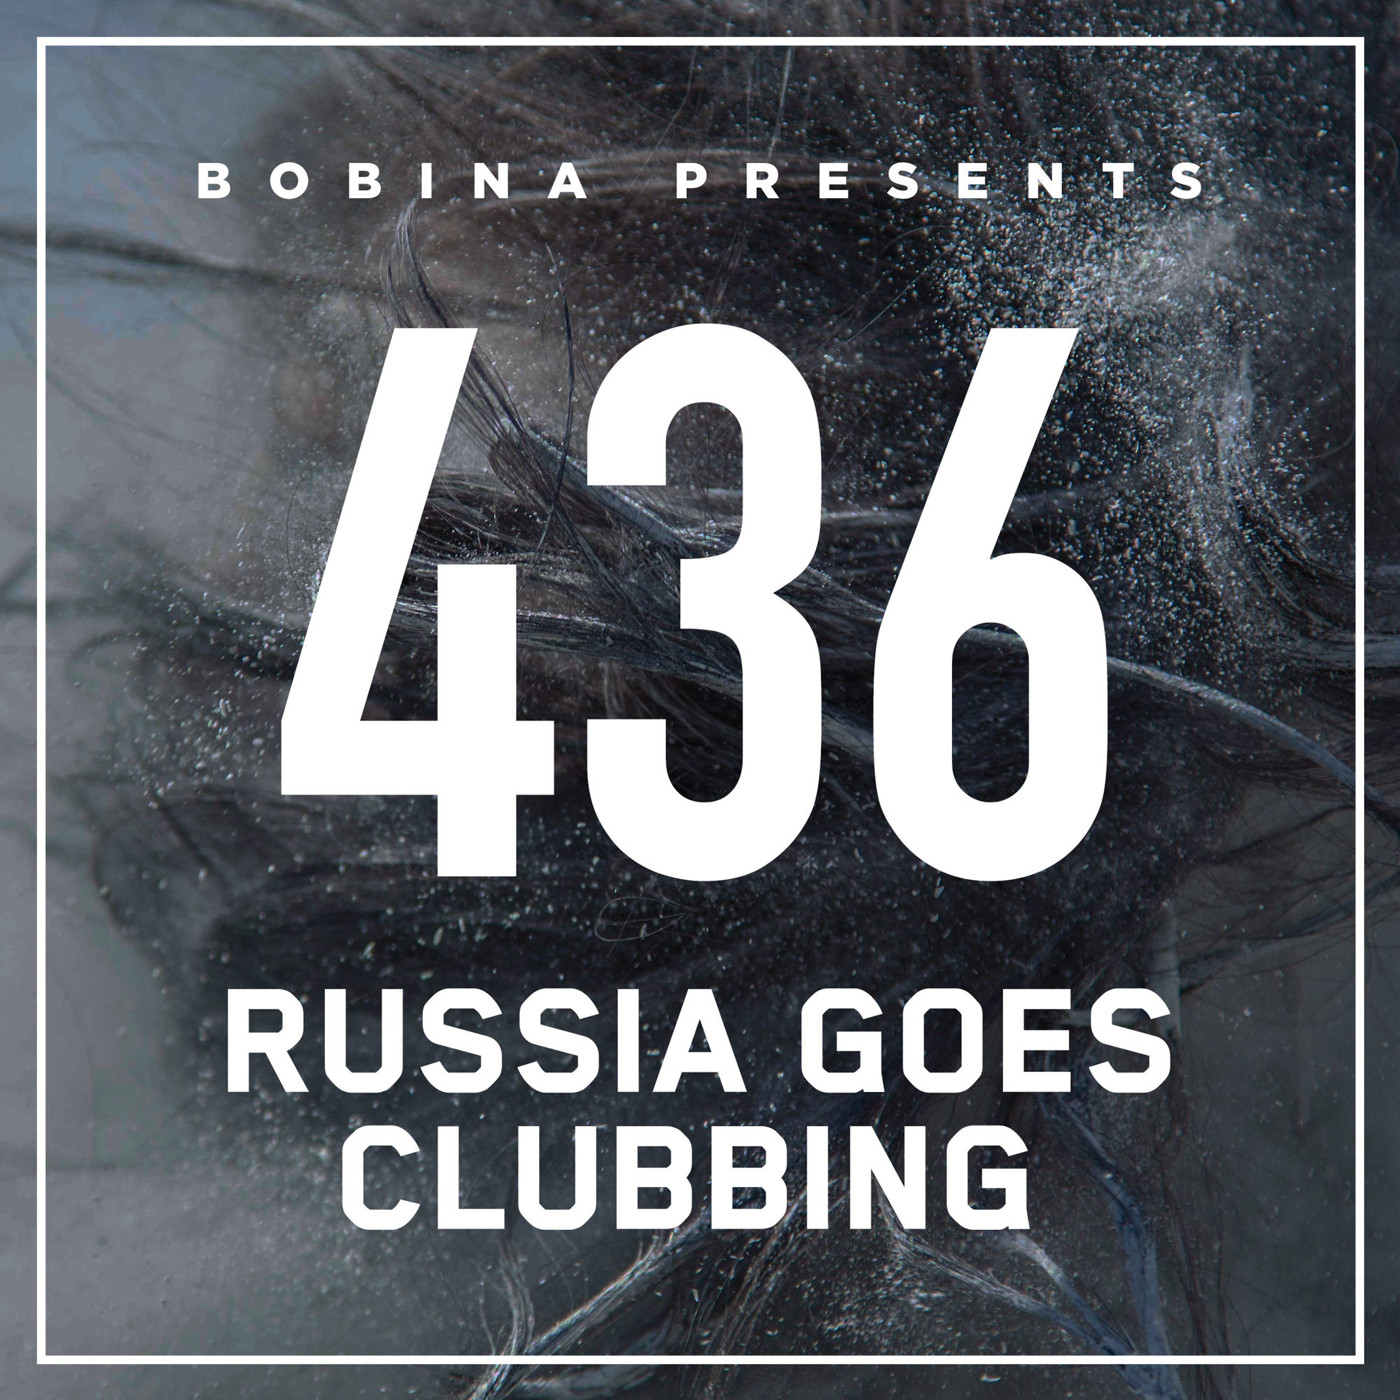 Bobina – Nr. 436 Russia Goes Clubbing (Rus)